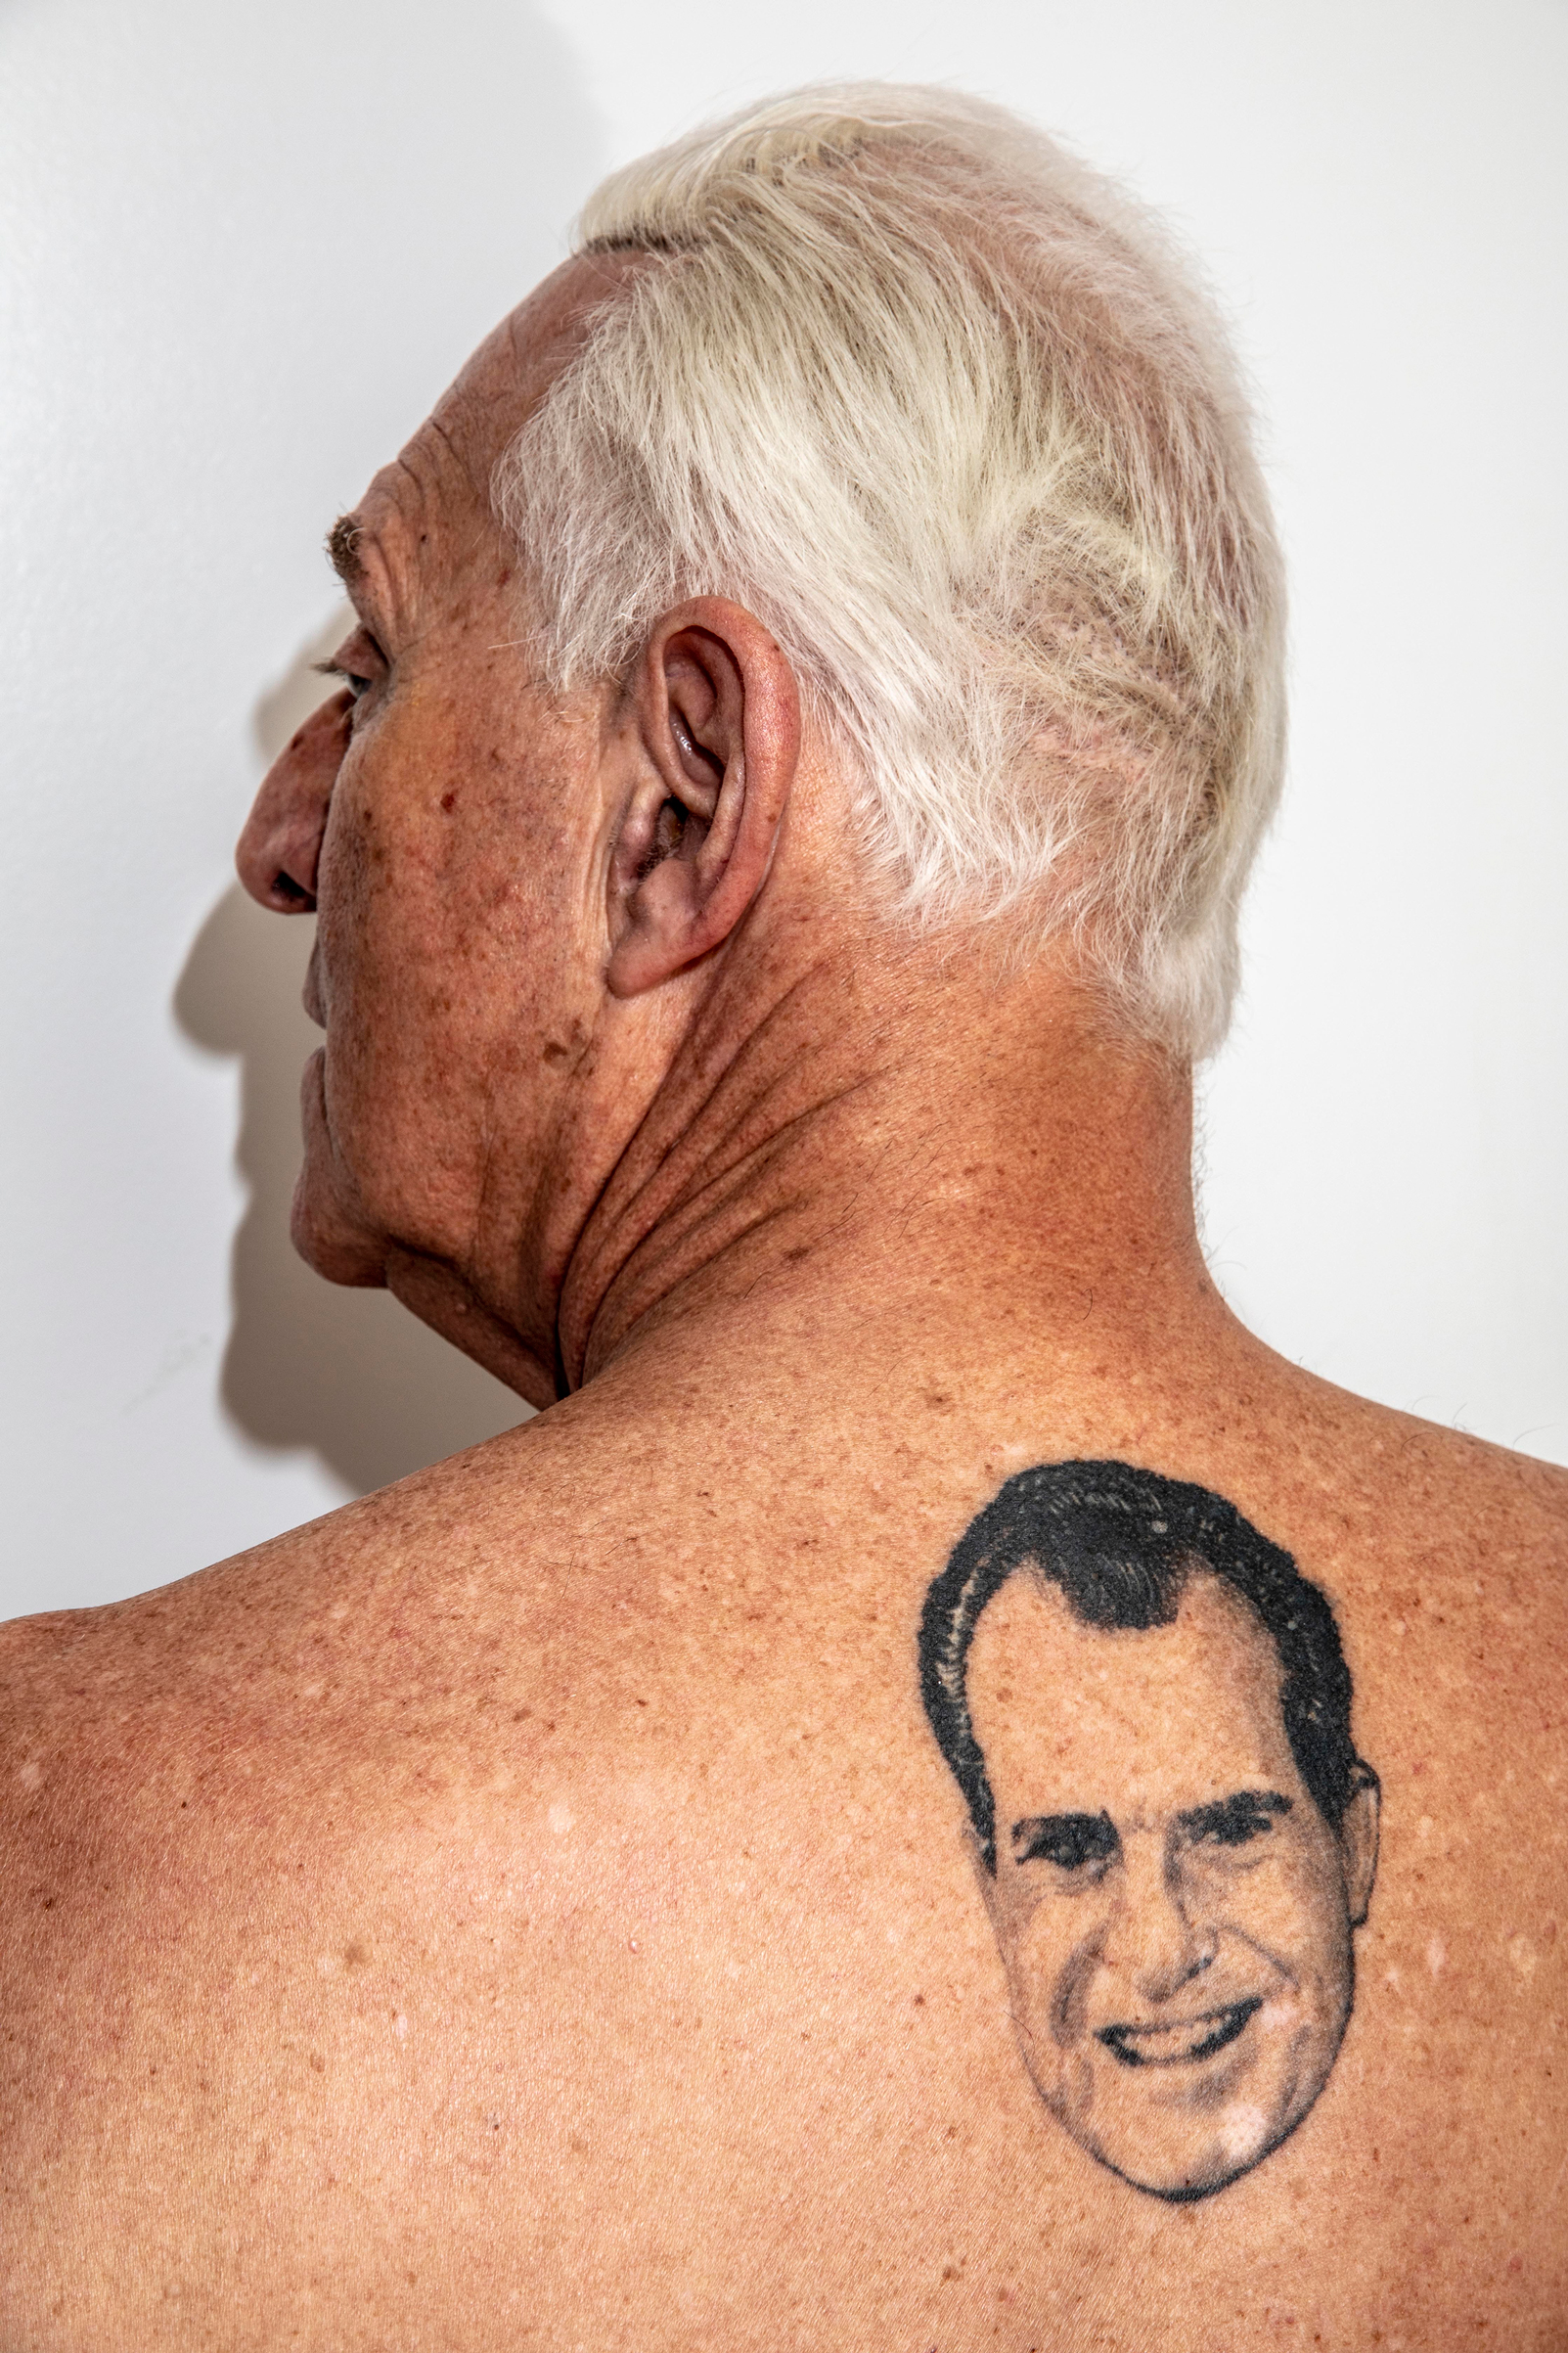 Roger Stone's tattoo of Richard Nixon.